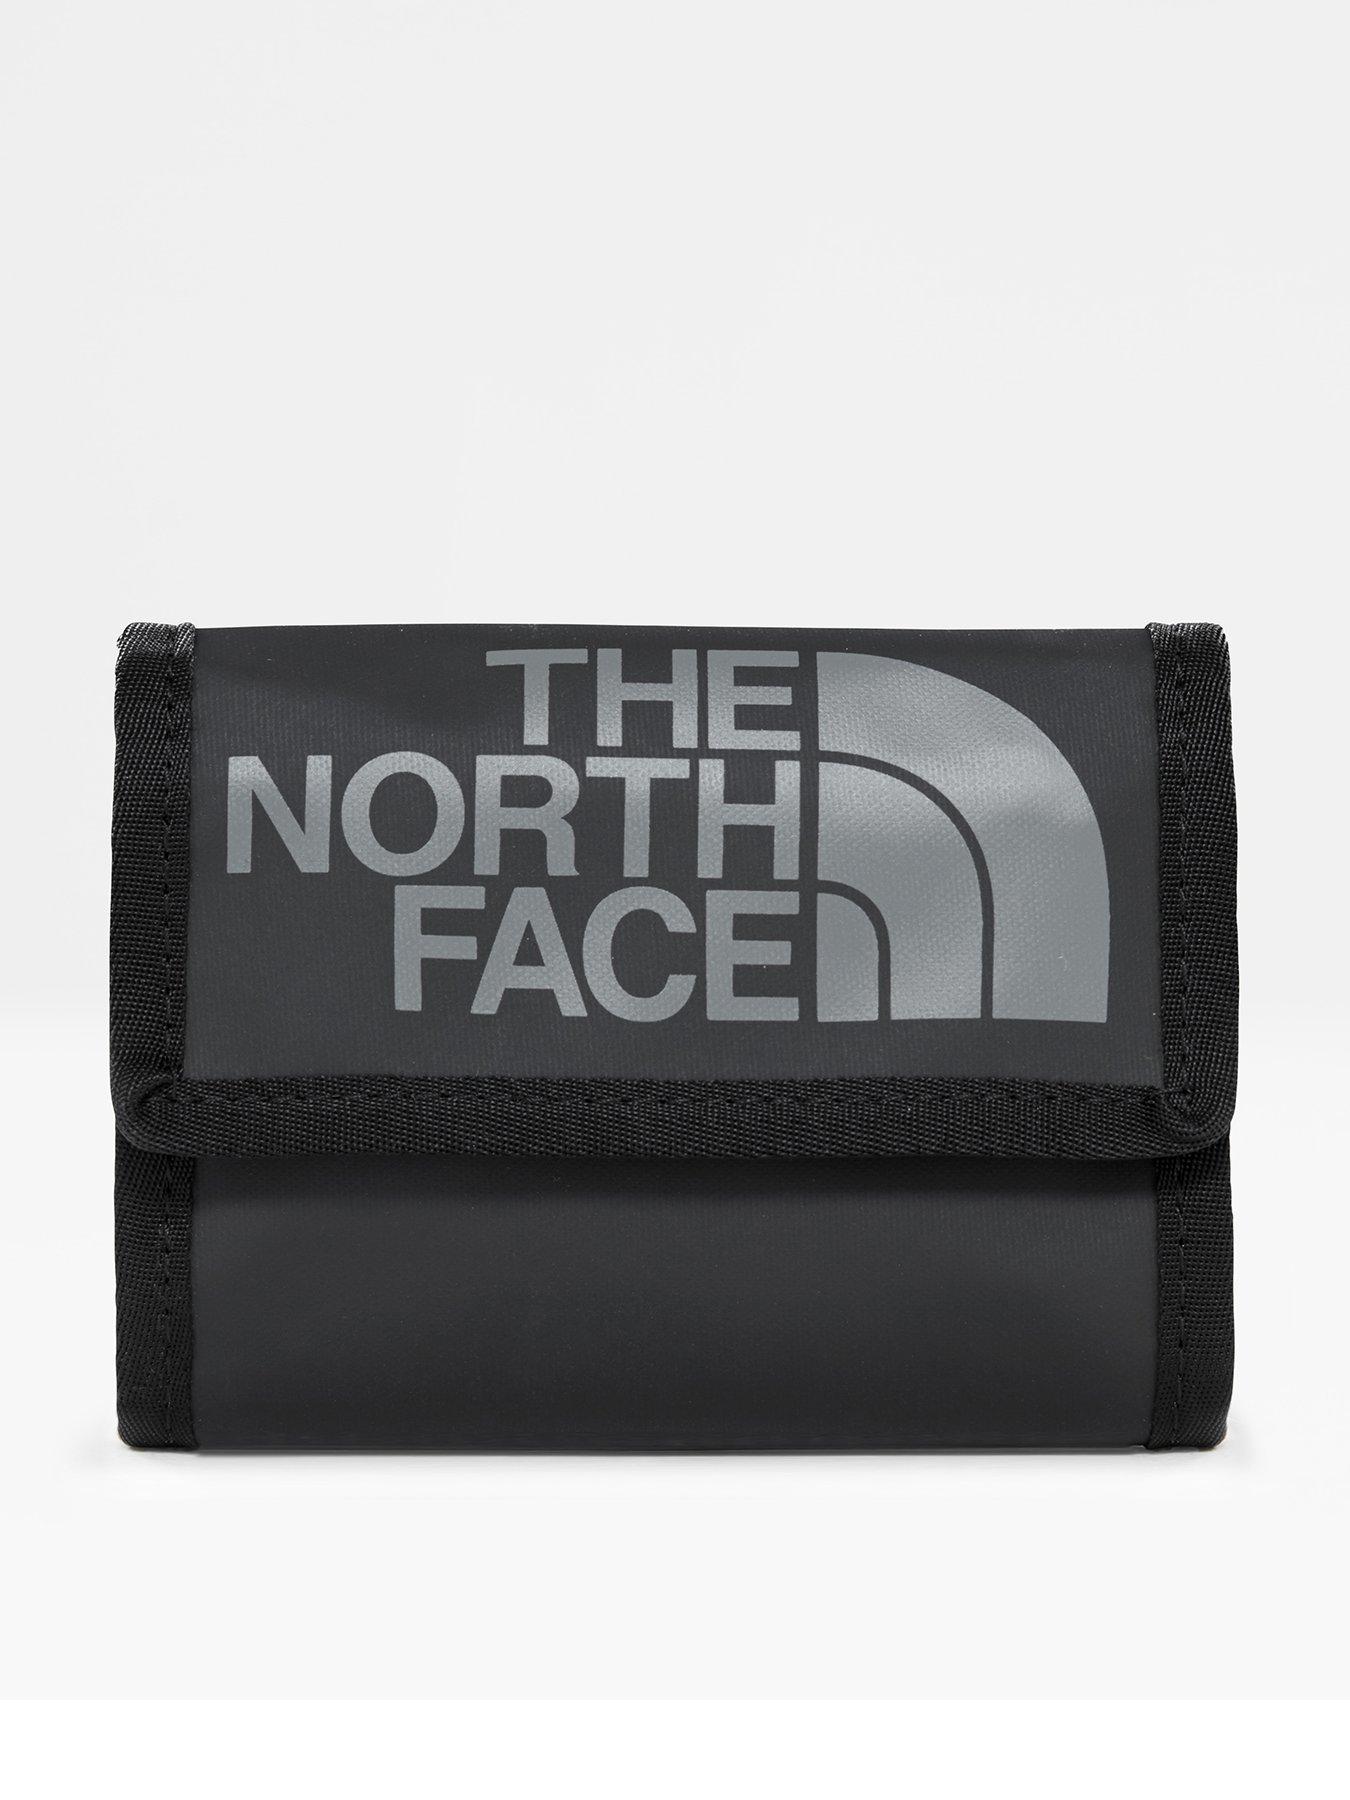 north face wallets uk